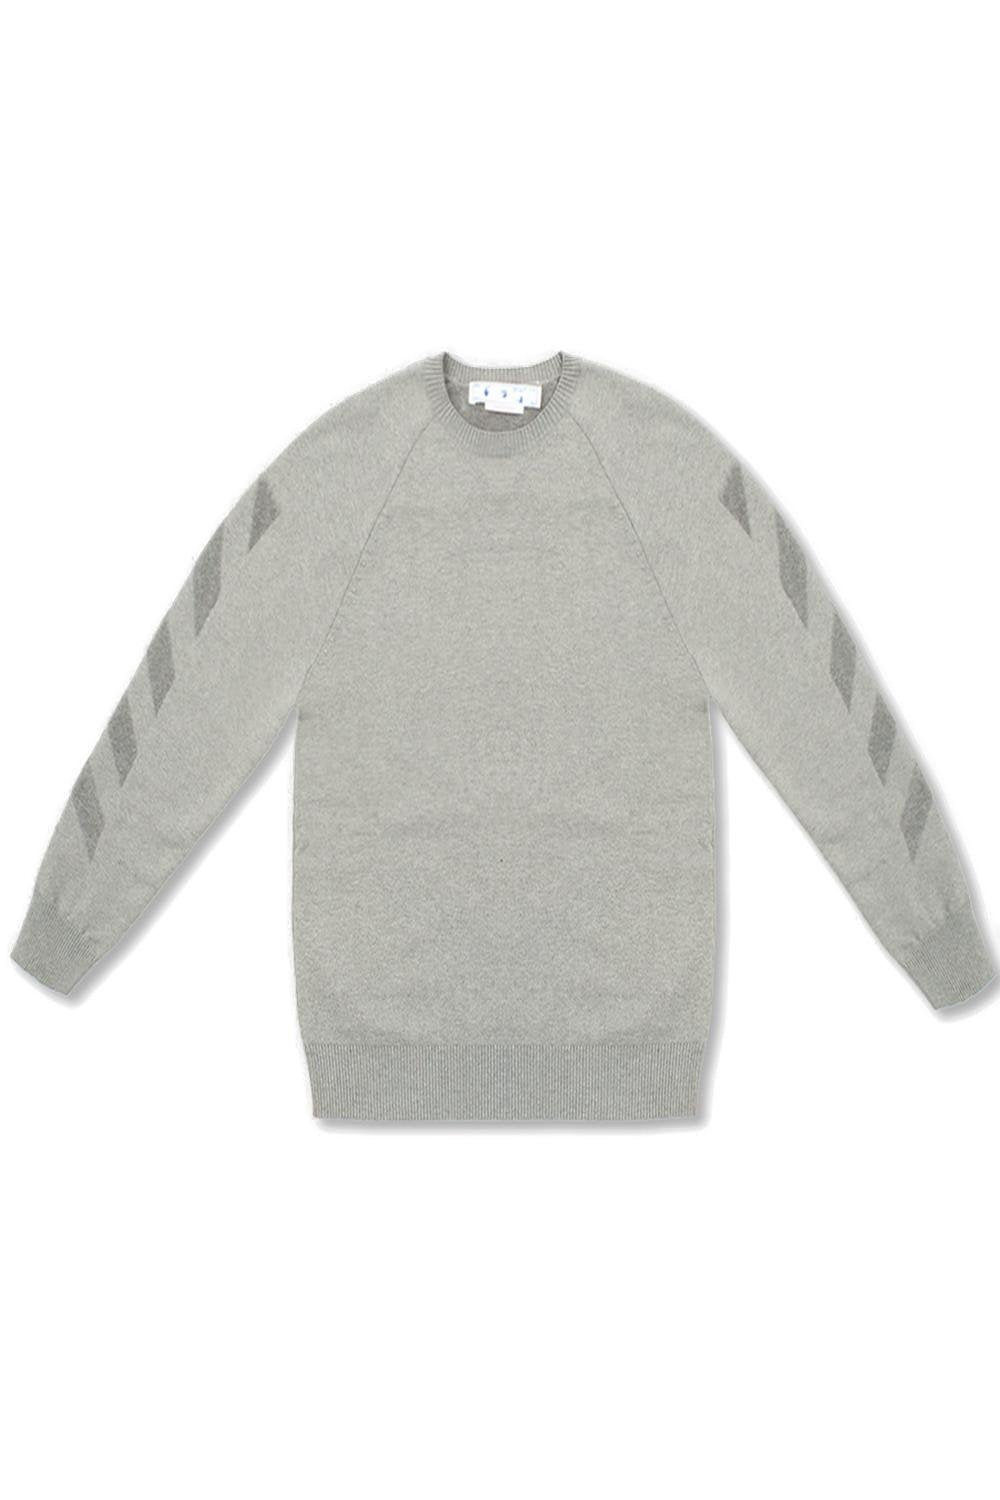 Off-White Crewneck Long-Sleeved Sweatshirt